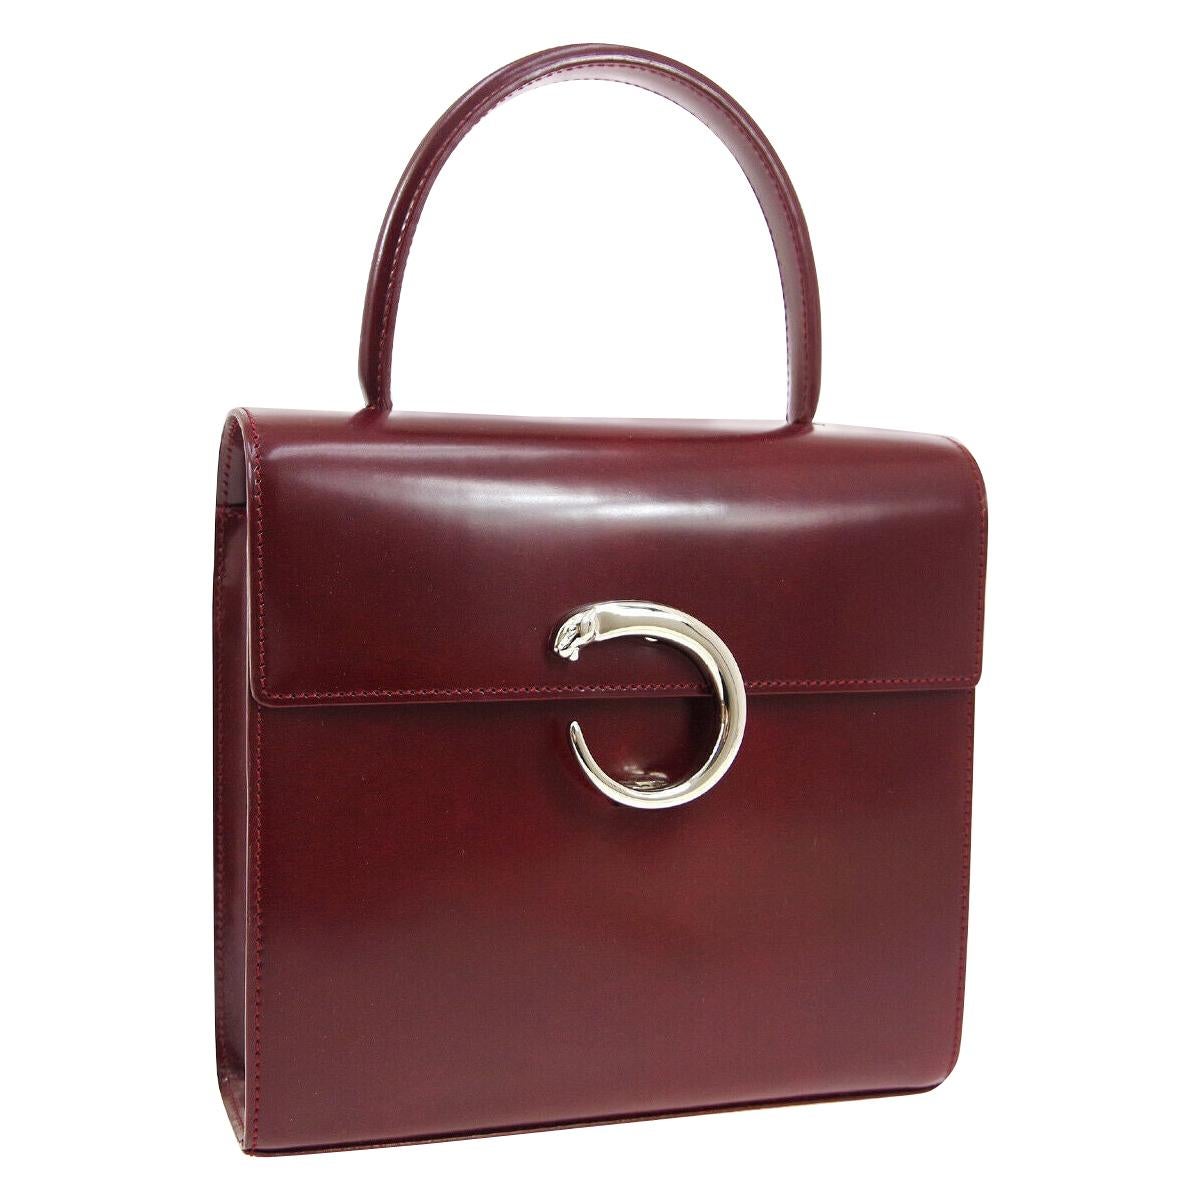 Cartier Burgundy Patent Leather Silver Emblem Kelly Style Top Handle Satchel Bag